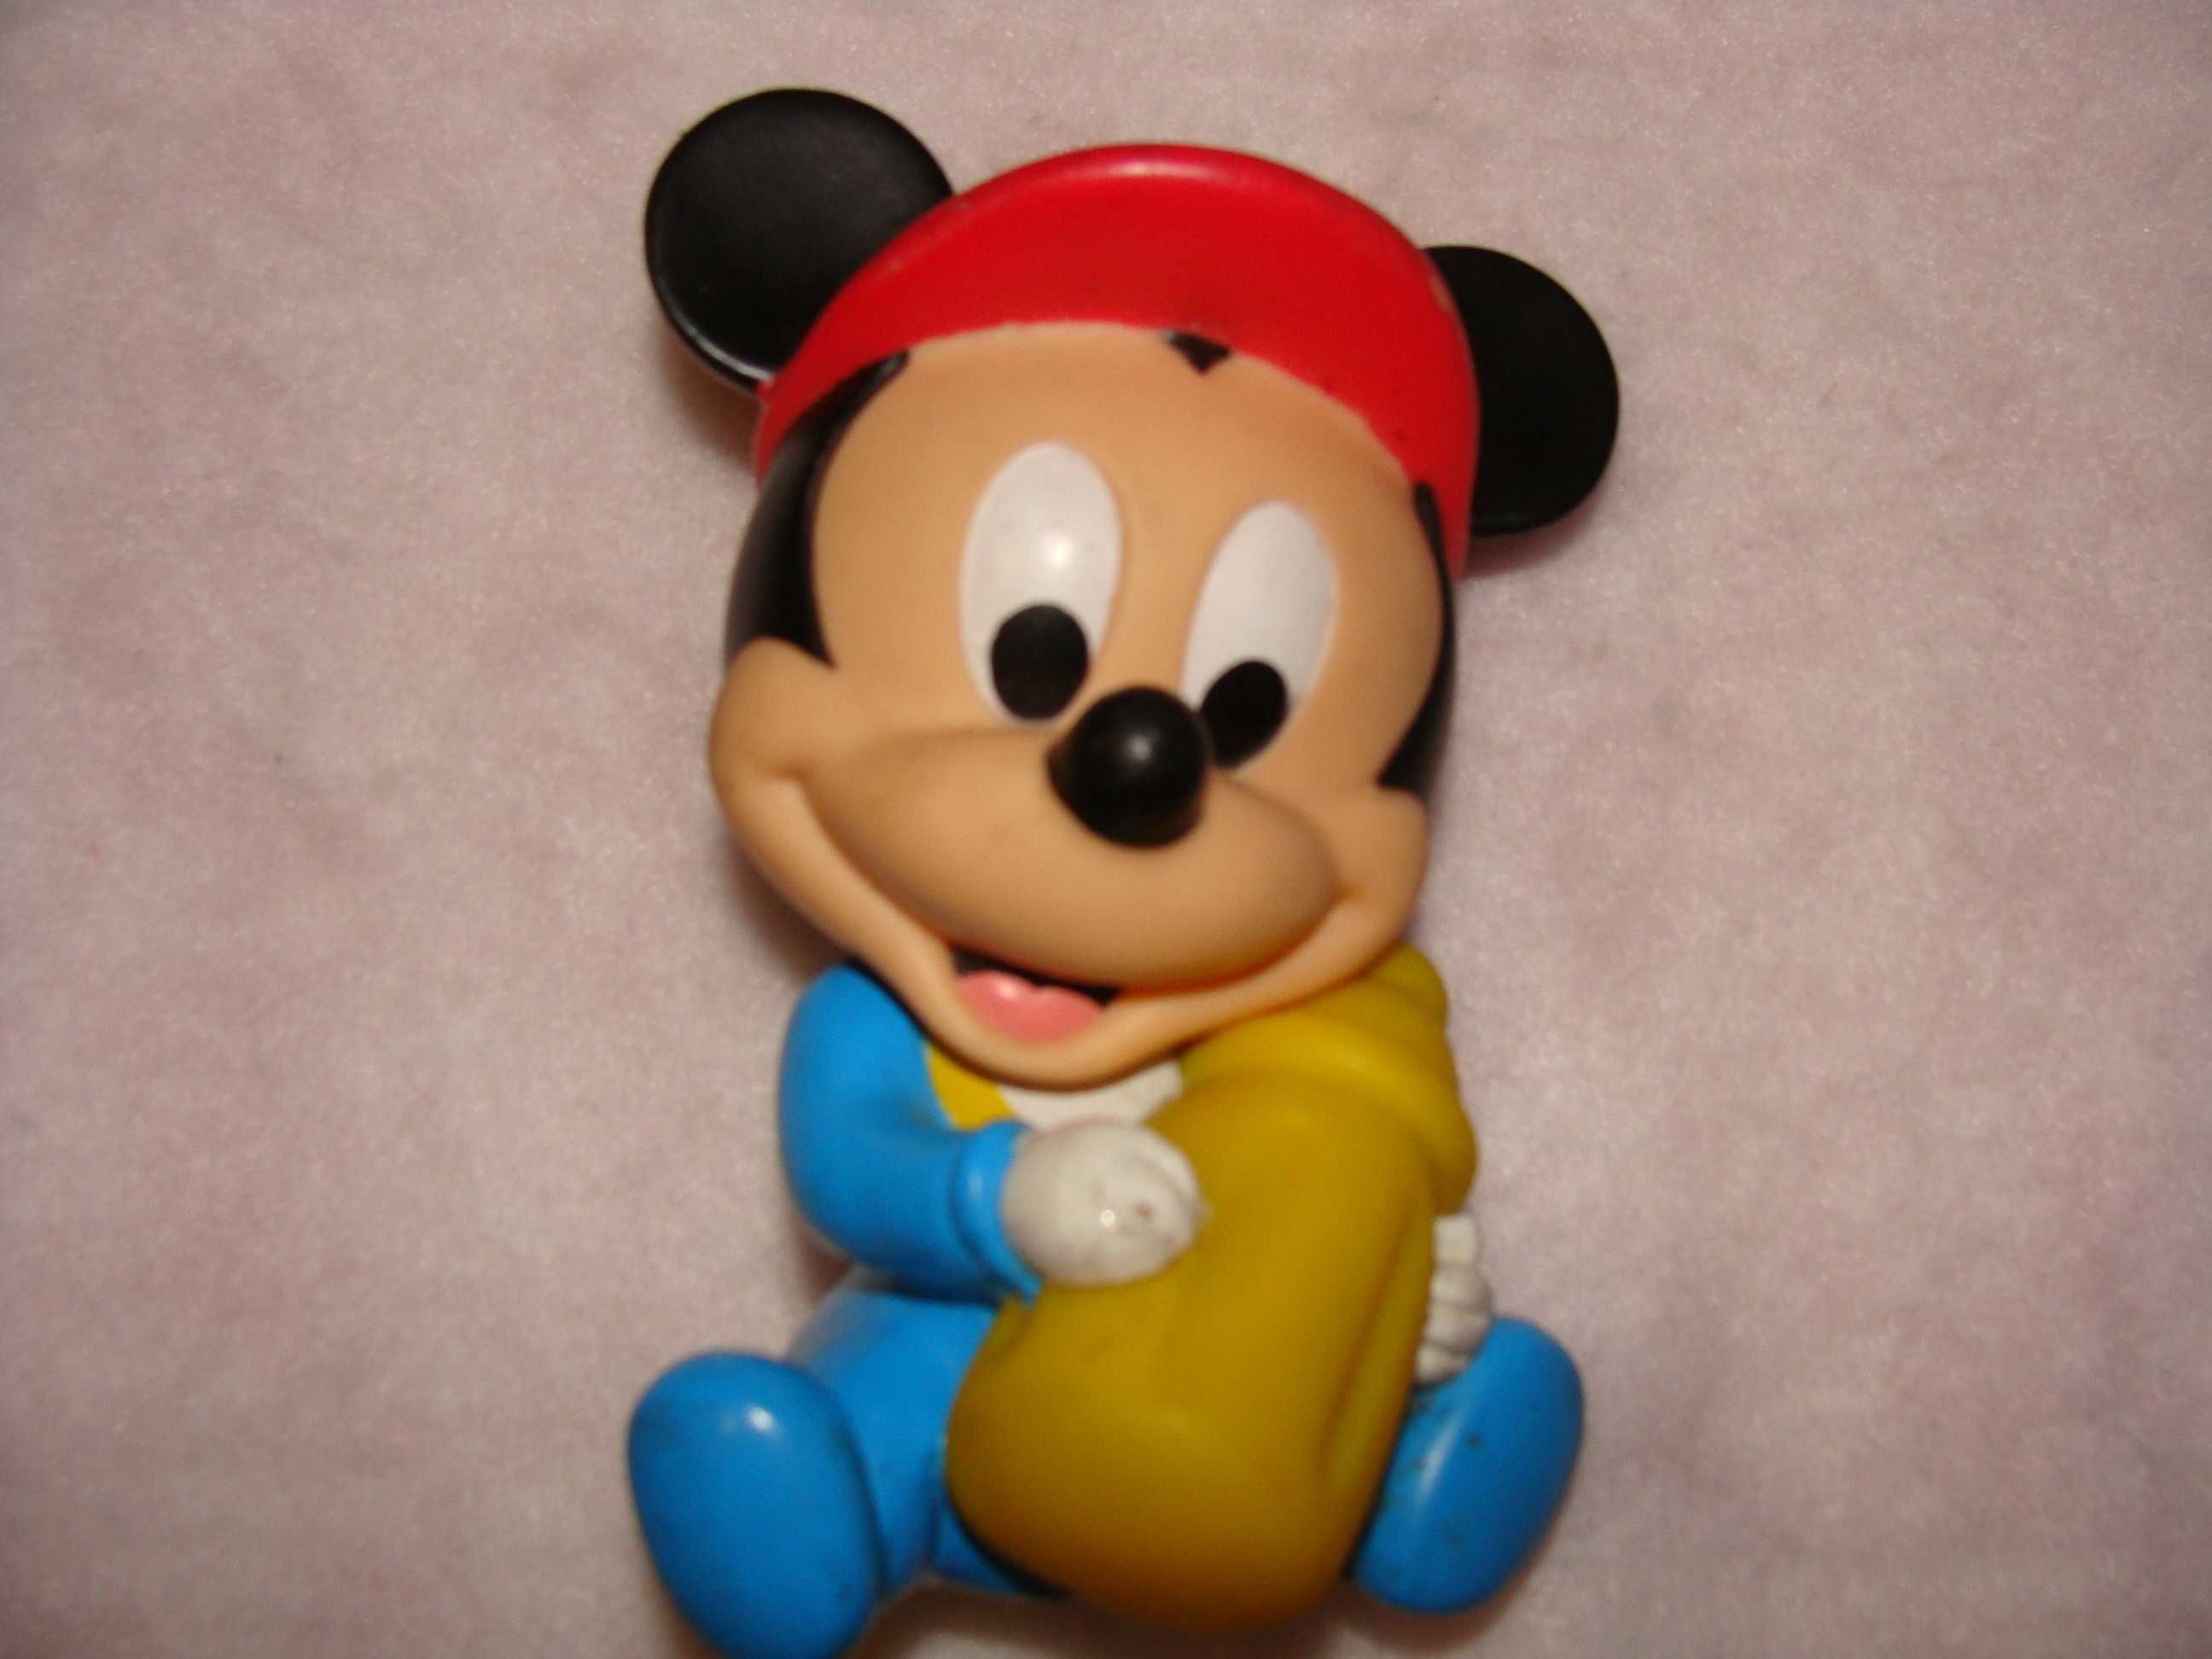 Mickey e Minnie Mouse Antigos/Vintage - 5 euros cada